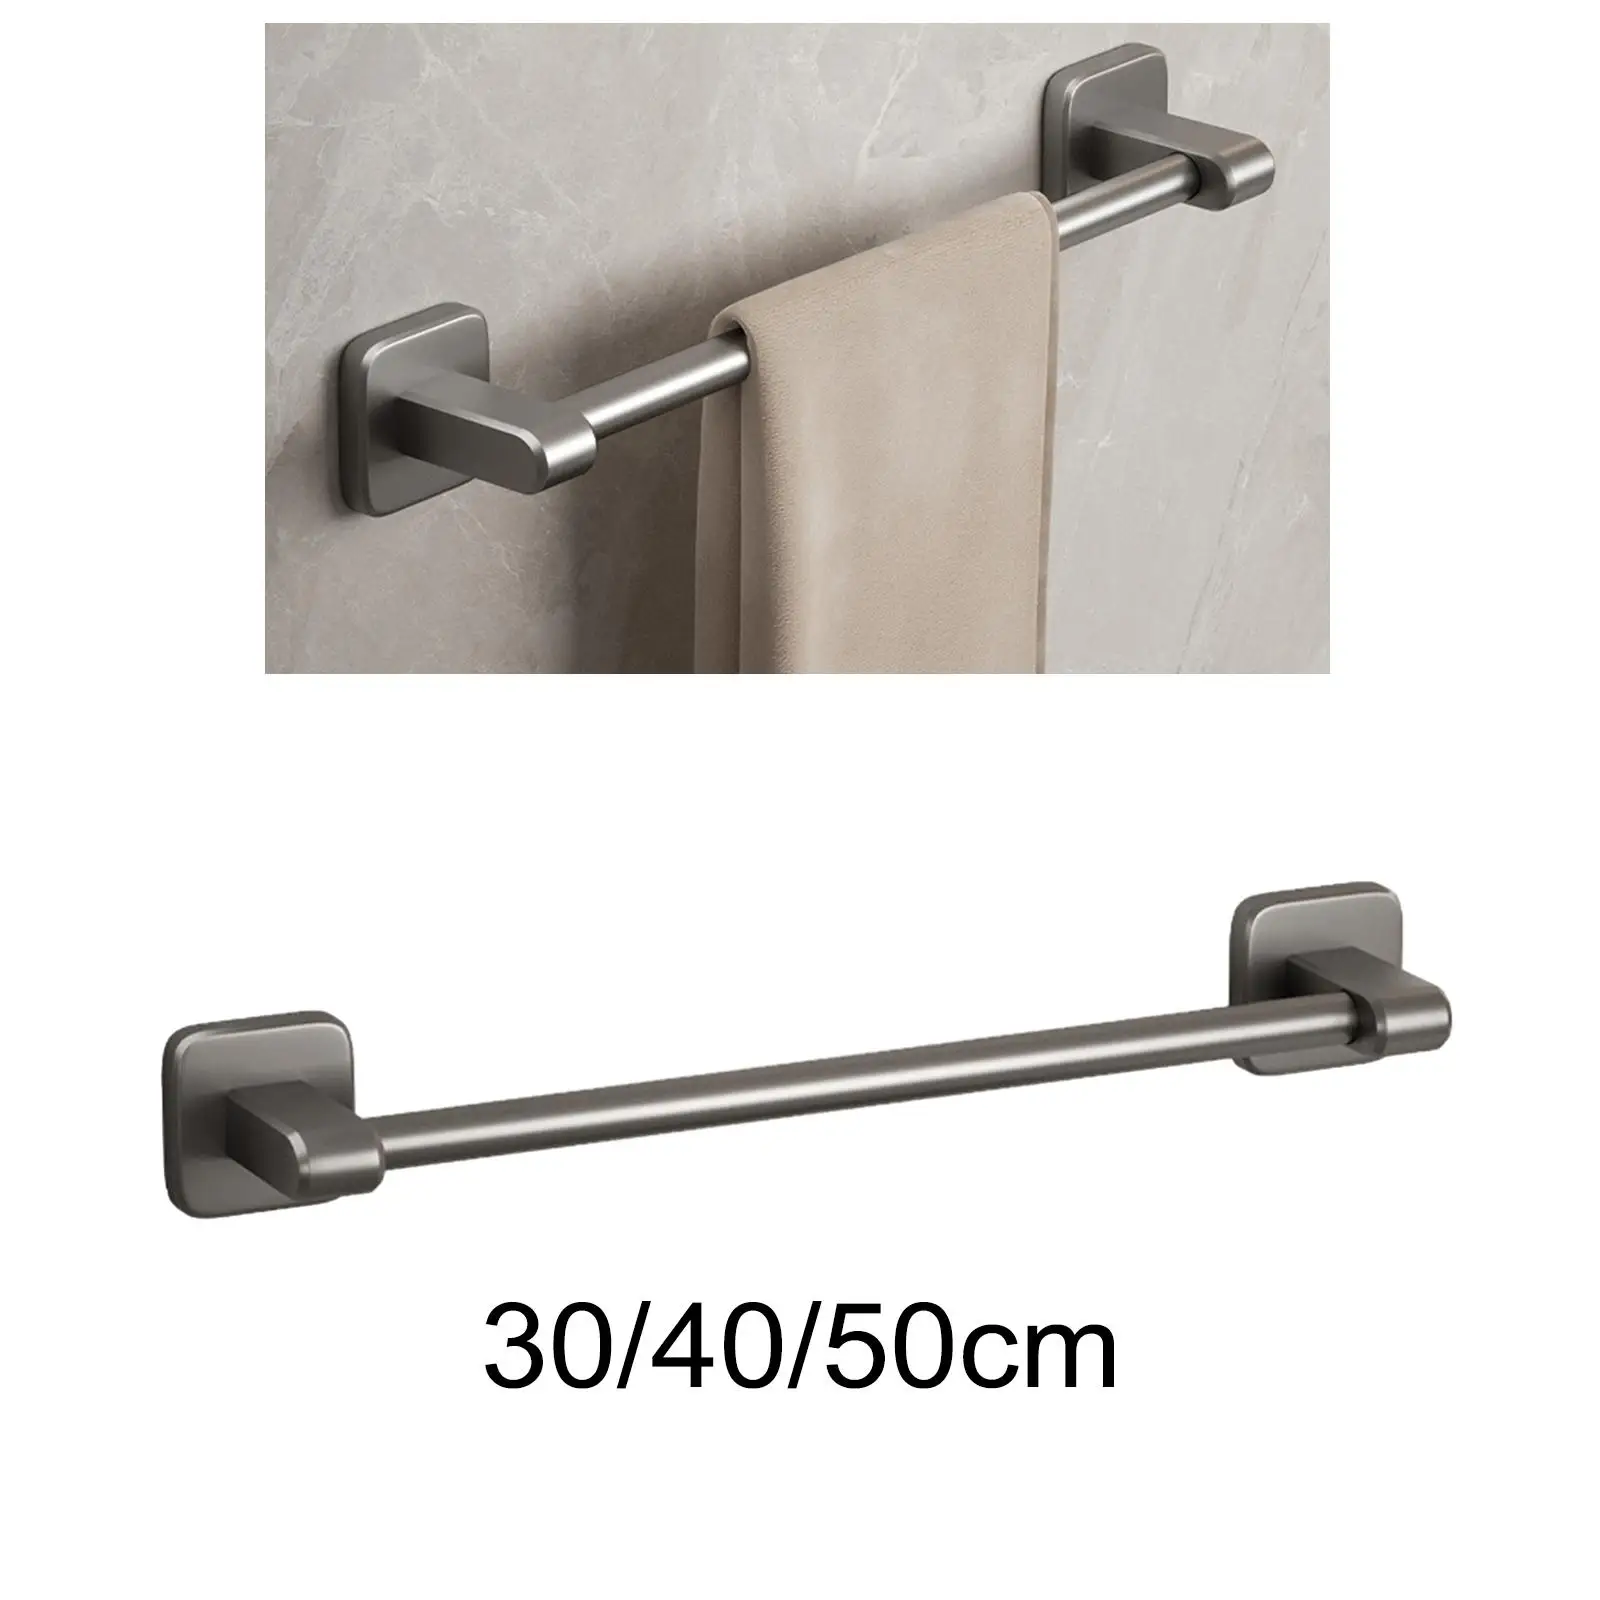 Towel Rack Holder Towel Bar for Bathroom Multi Function Space Saving Wall Mounted Towel Hanging Rod Towel Shelf for Bathroom